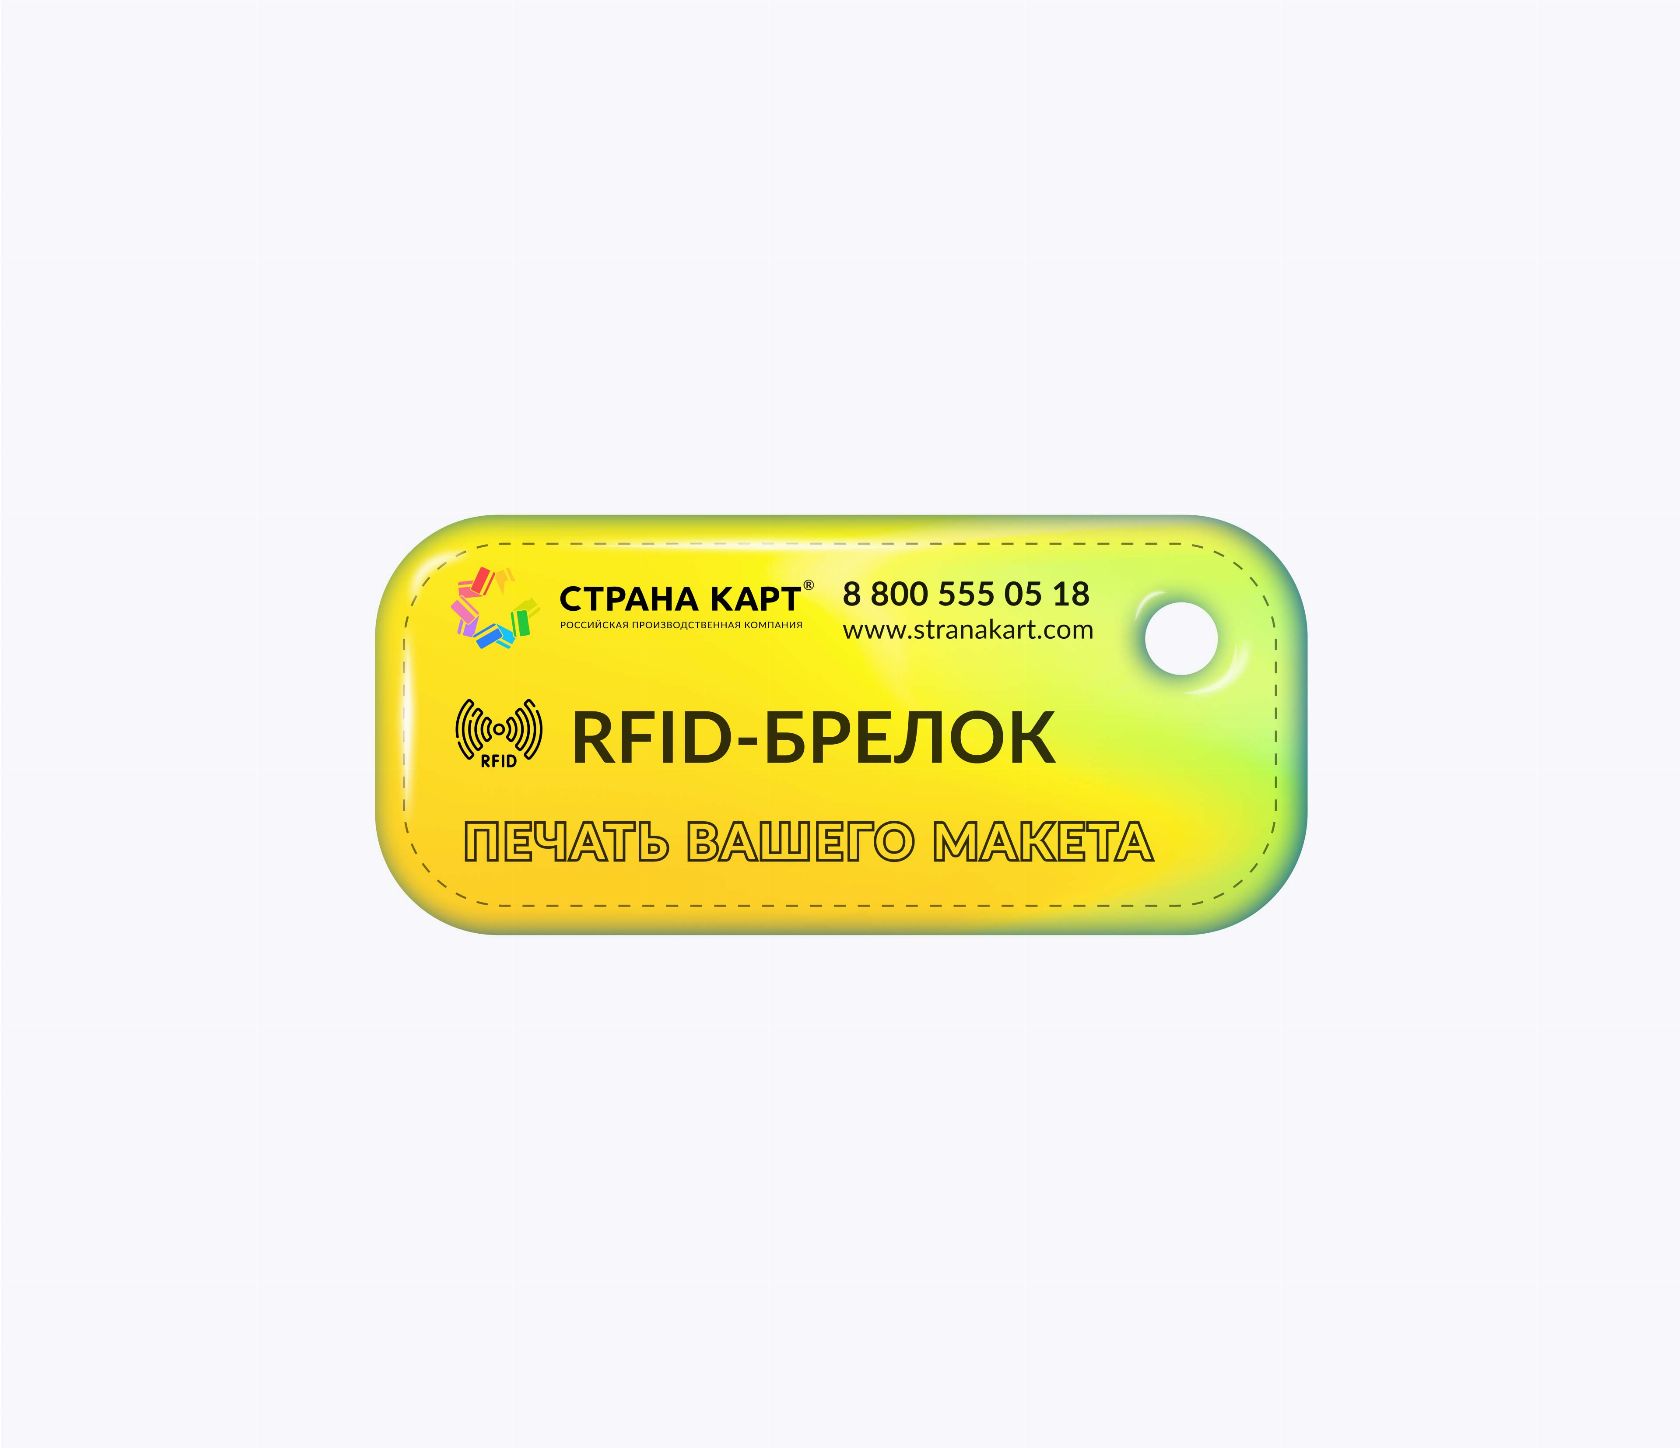 Прямоугольные мини RFID-брелоки NEOKEY® с чипом NXP MIFARE Ultralight 7 byte UID RFID-брелоки NEOKEY® с чипом NXP MIFARE Ultralight 7 byte UID и вашим логотипом